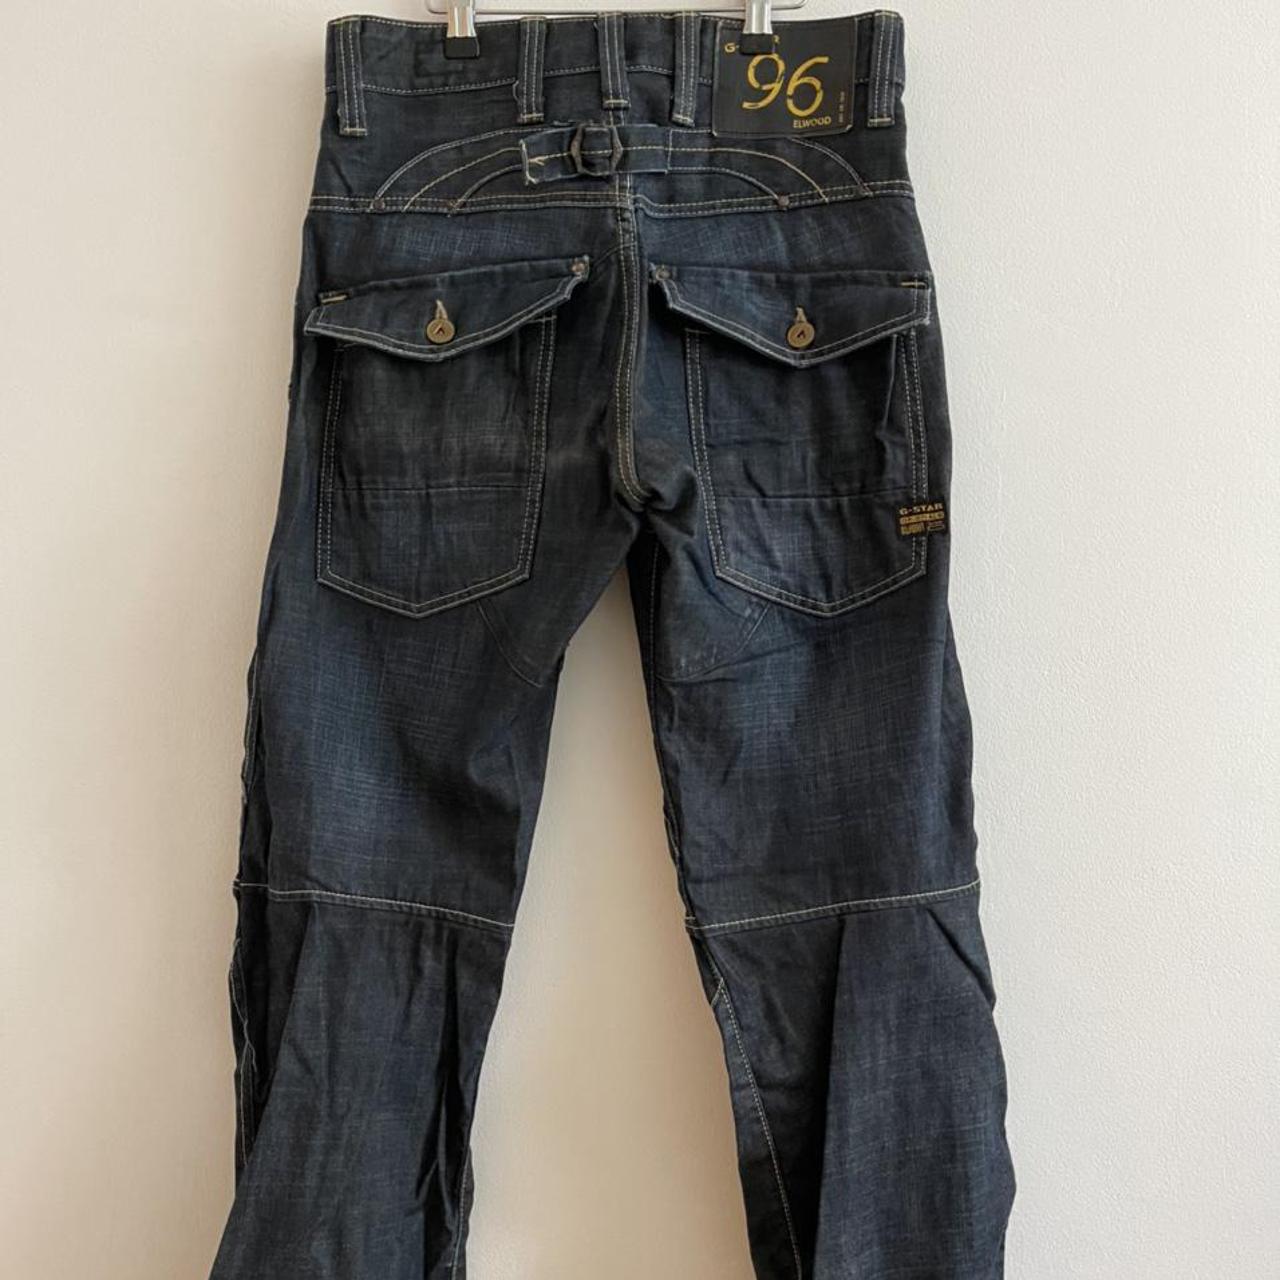 Gstar raw 96 Elmeood 5620 straight cut jeans, size... - Depop